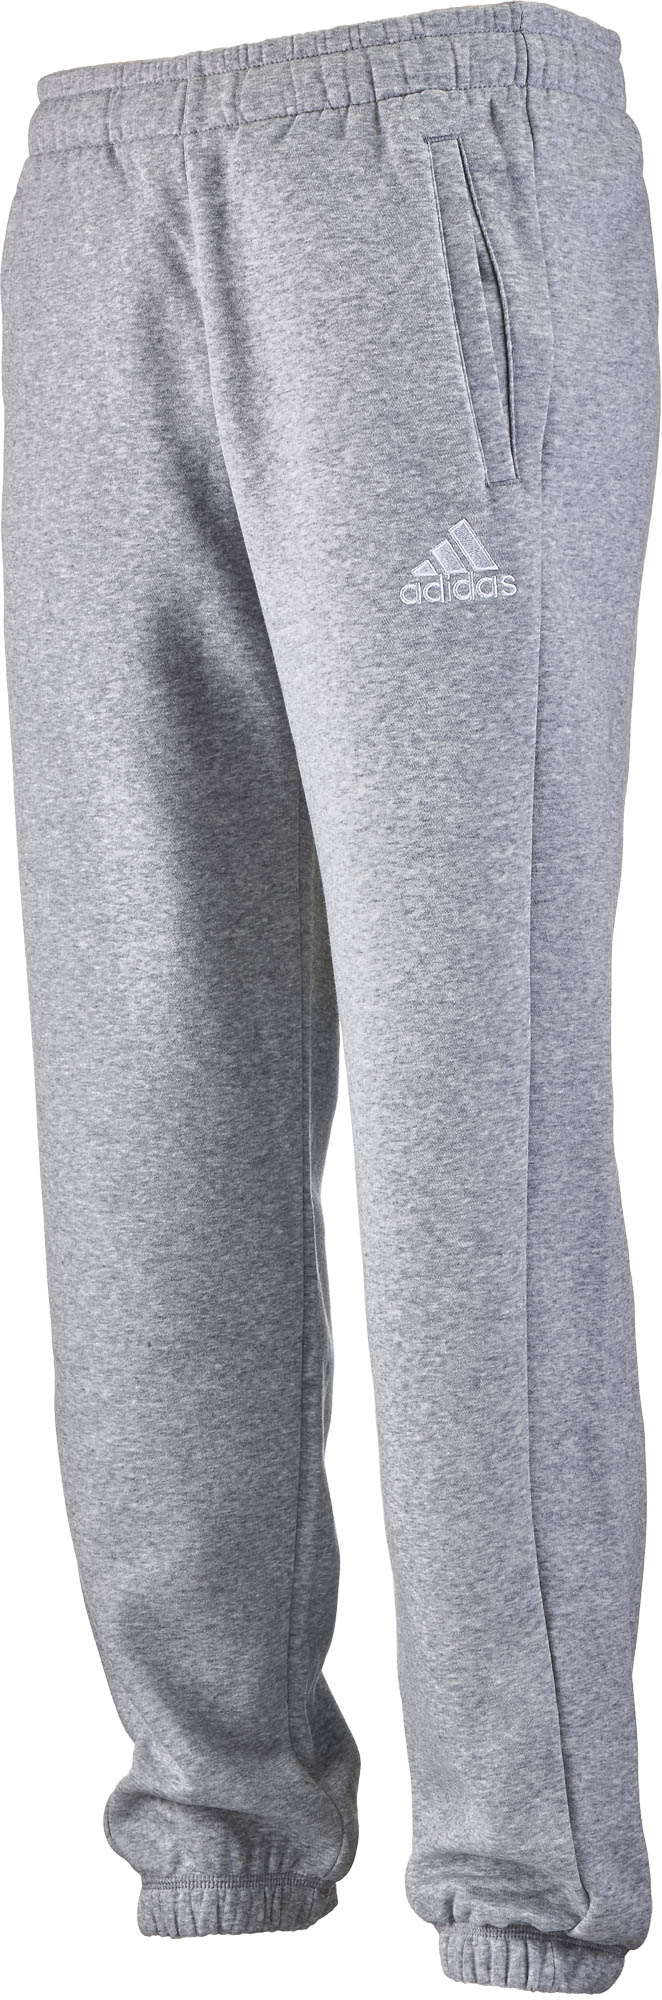 adidas Kids Core 15 Sweatpants - Medium Grey Heather & White - Soccer Master